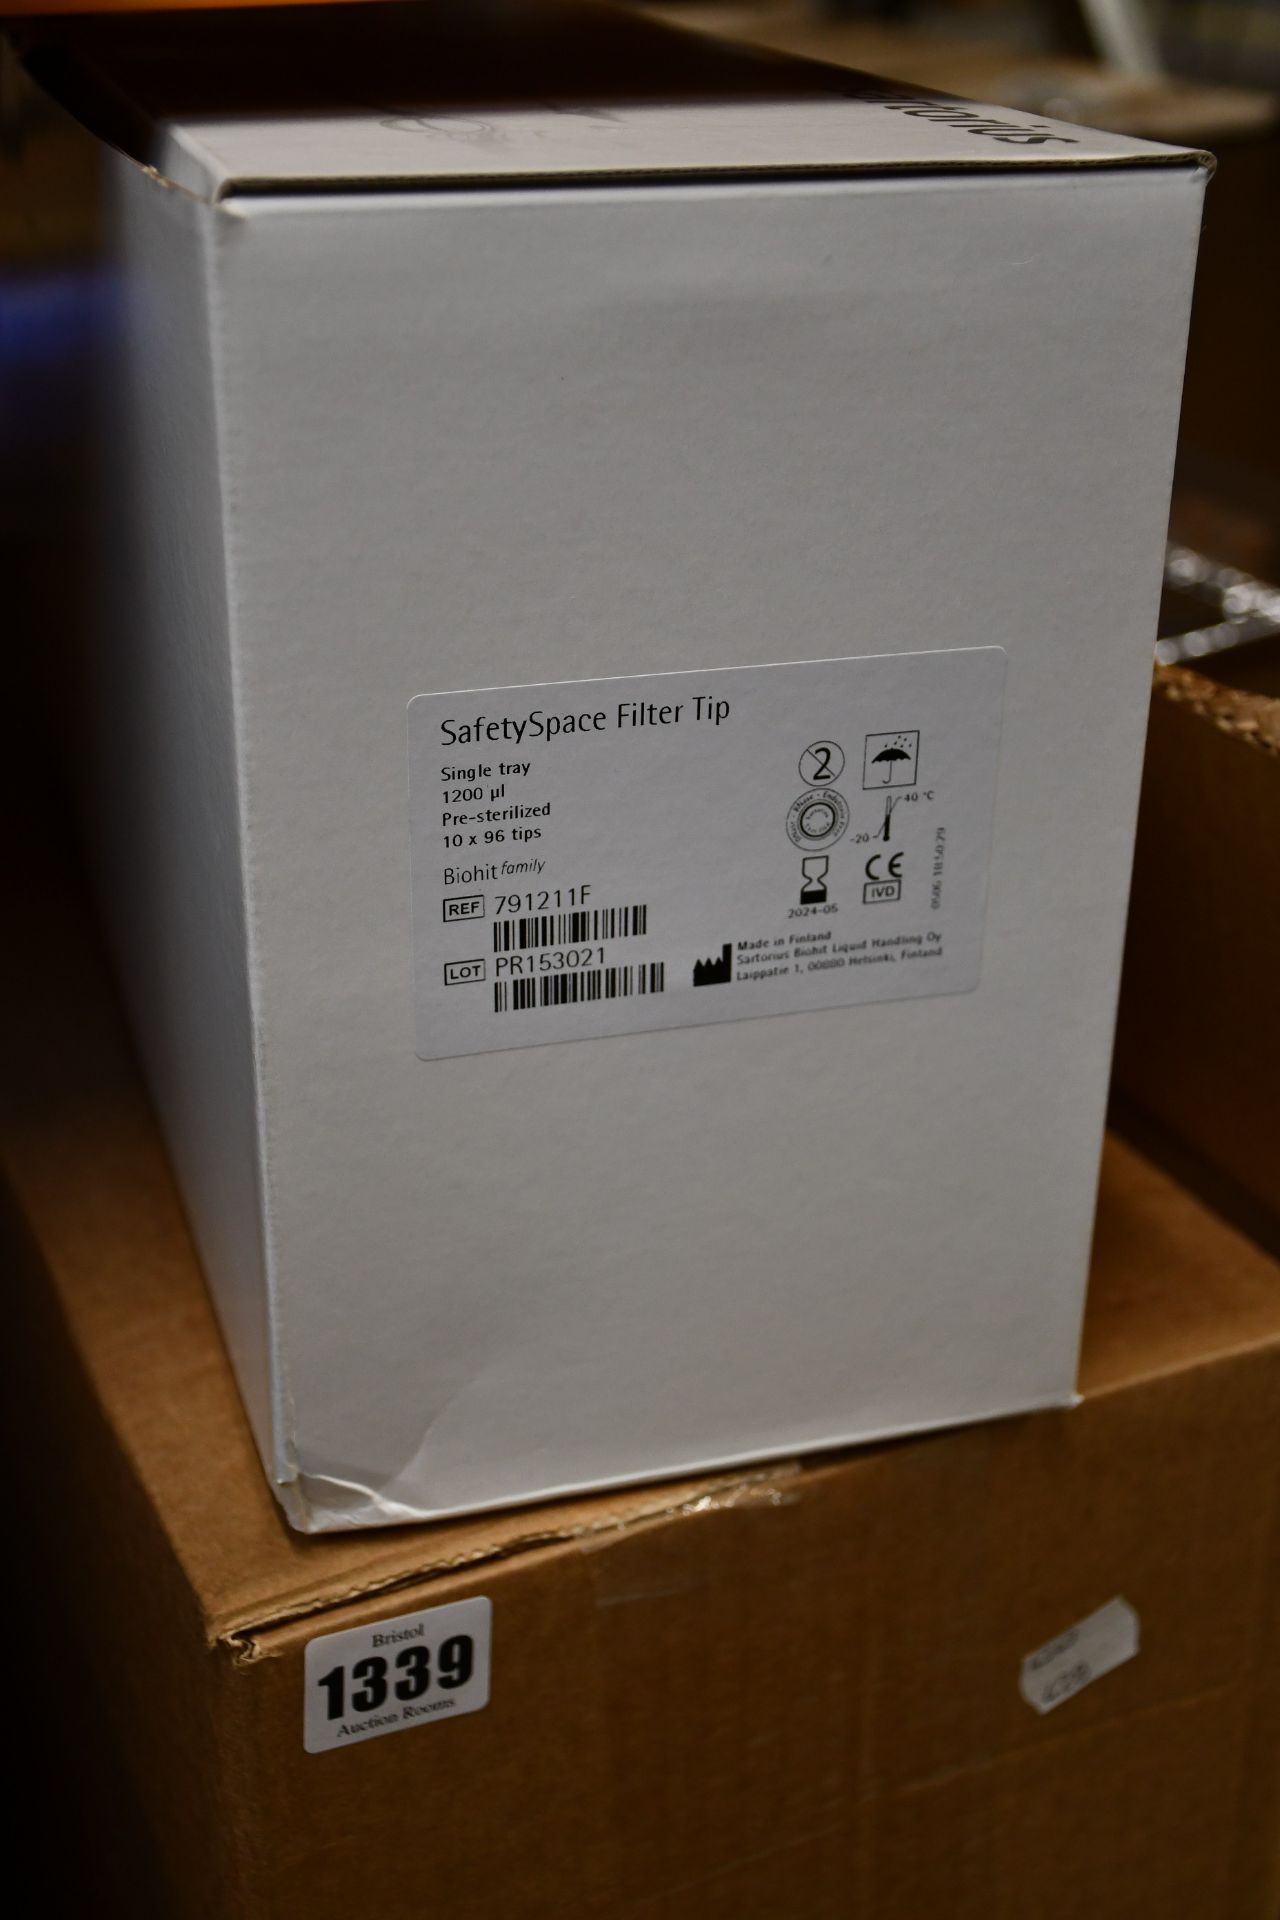 Four boxes of Sartorius SafetySpace Filter Tips 791211F (Ten x 96 tips per box).